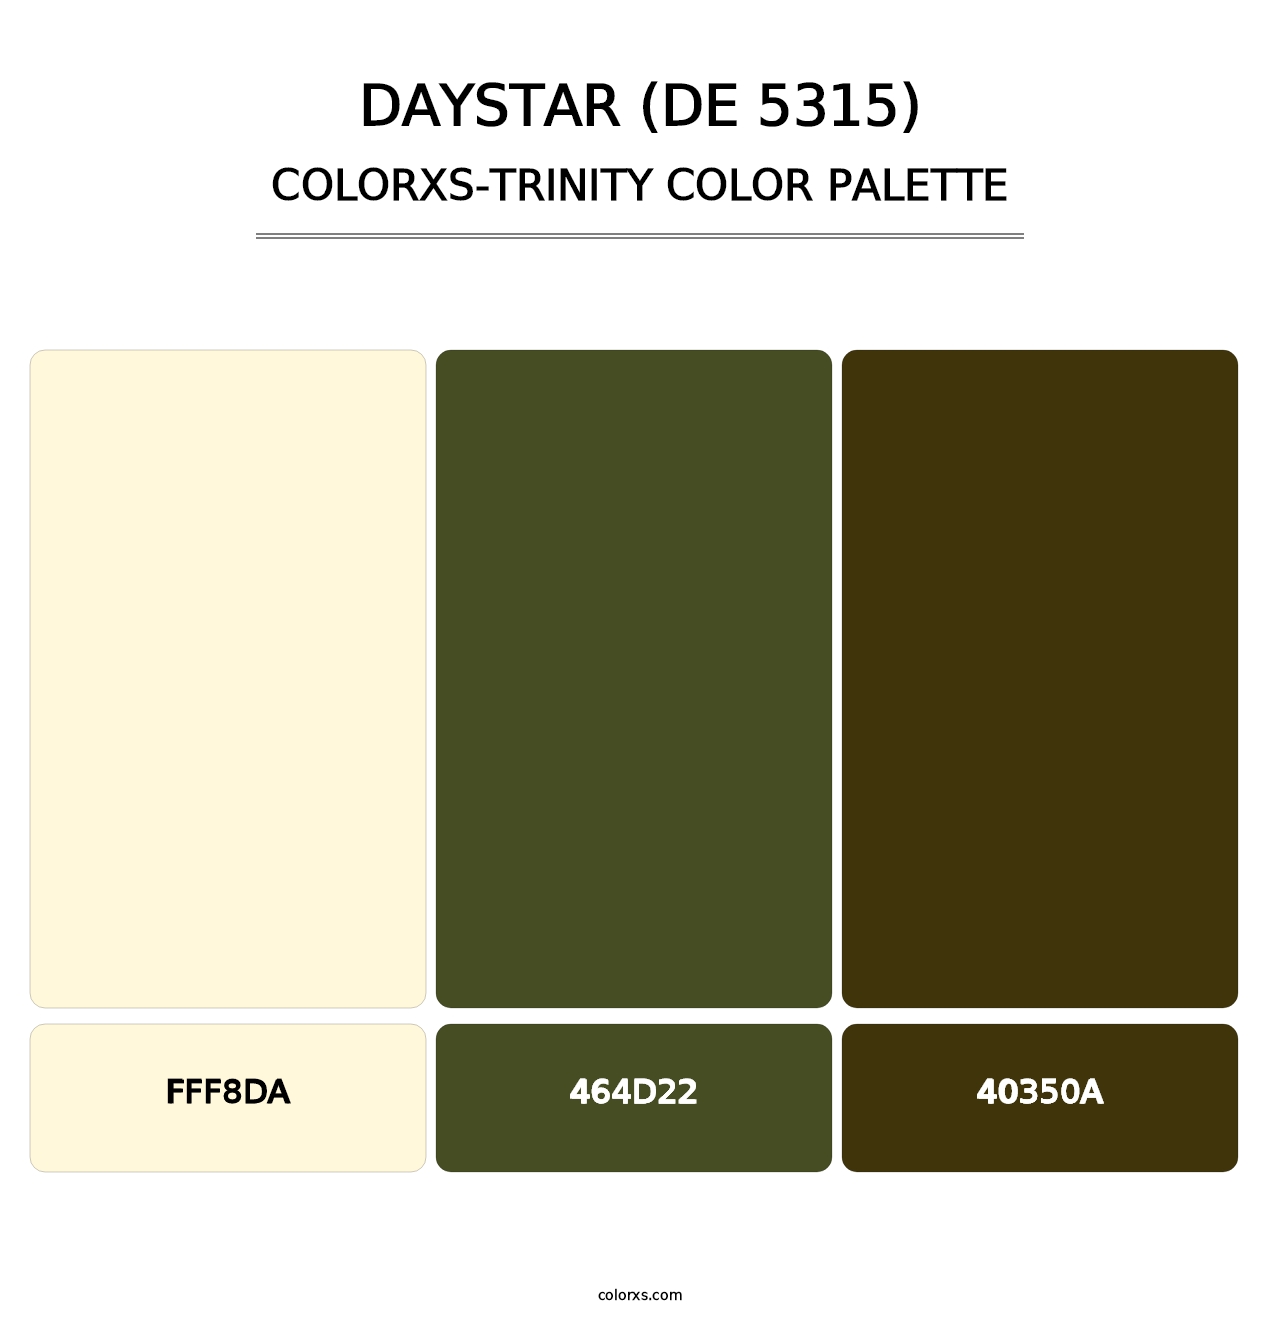 Daystar (DE 5315) - Colorxs Trinity Palette